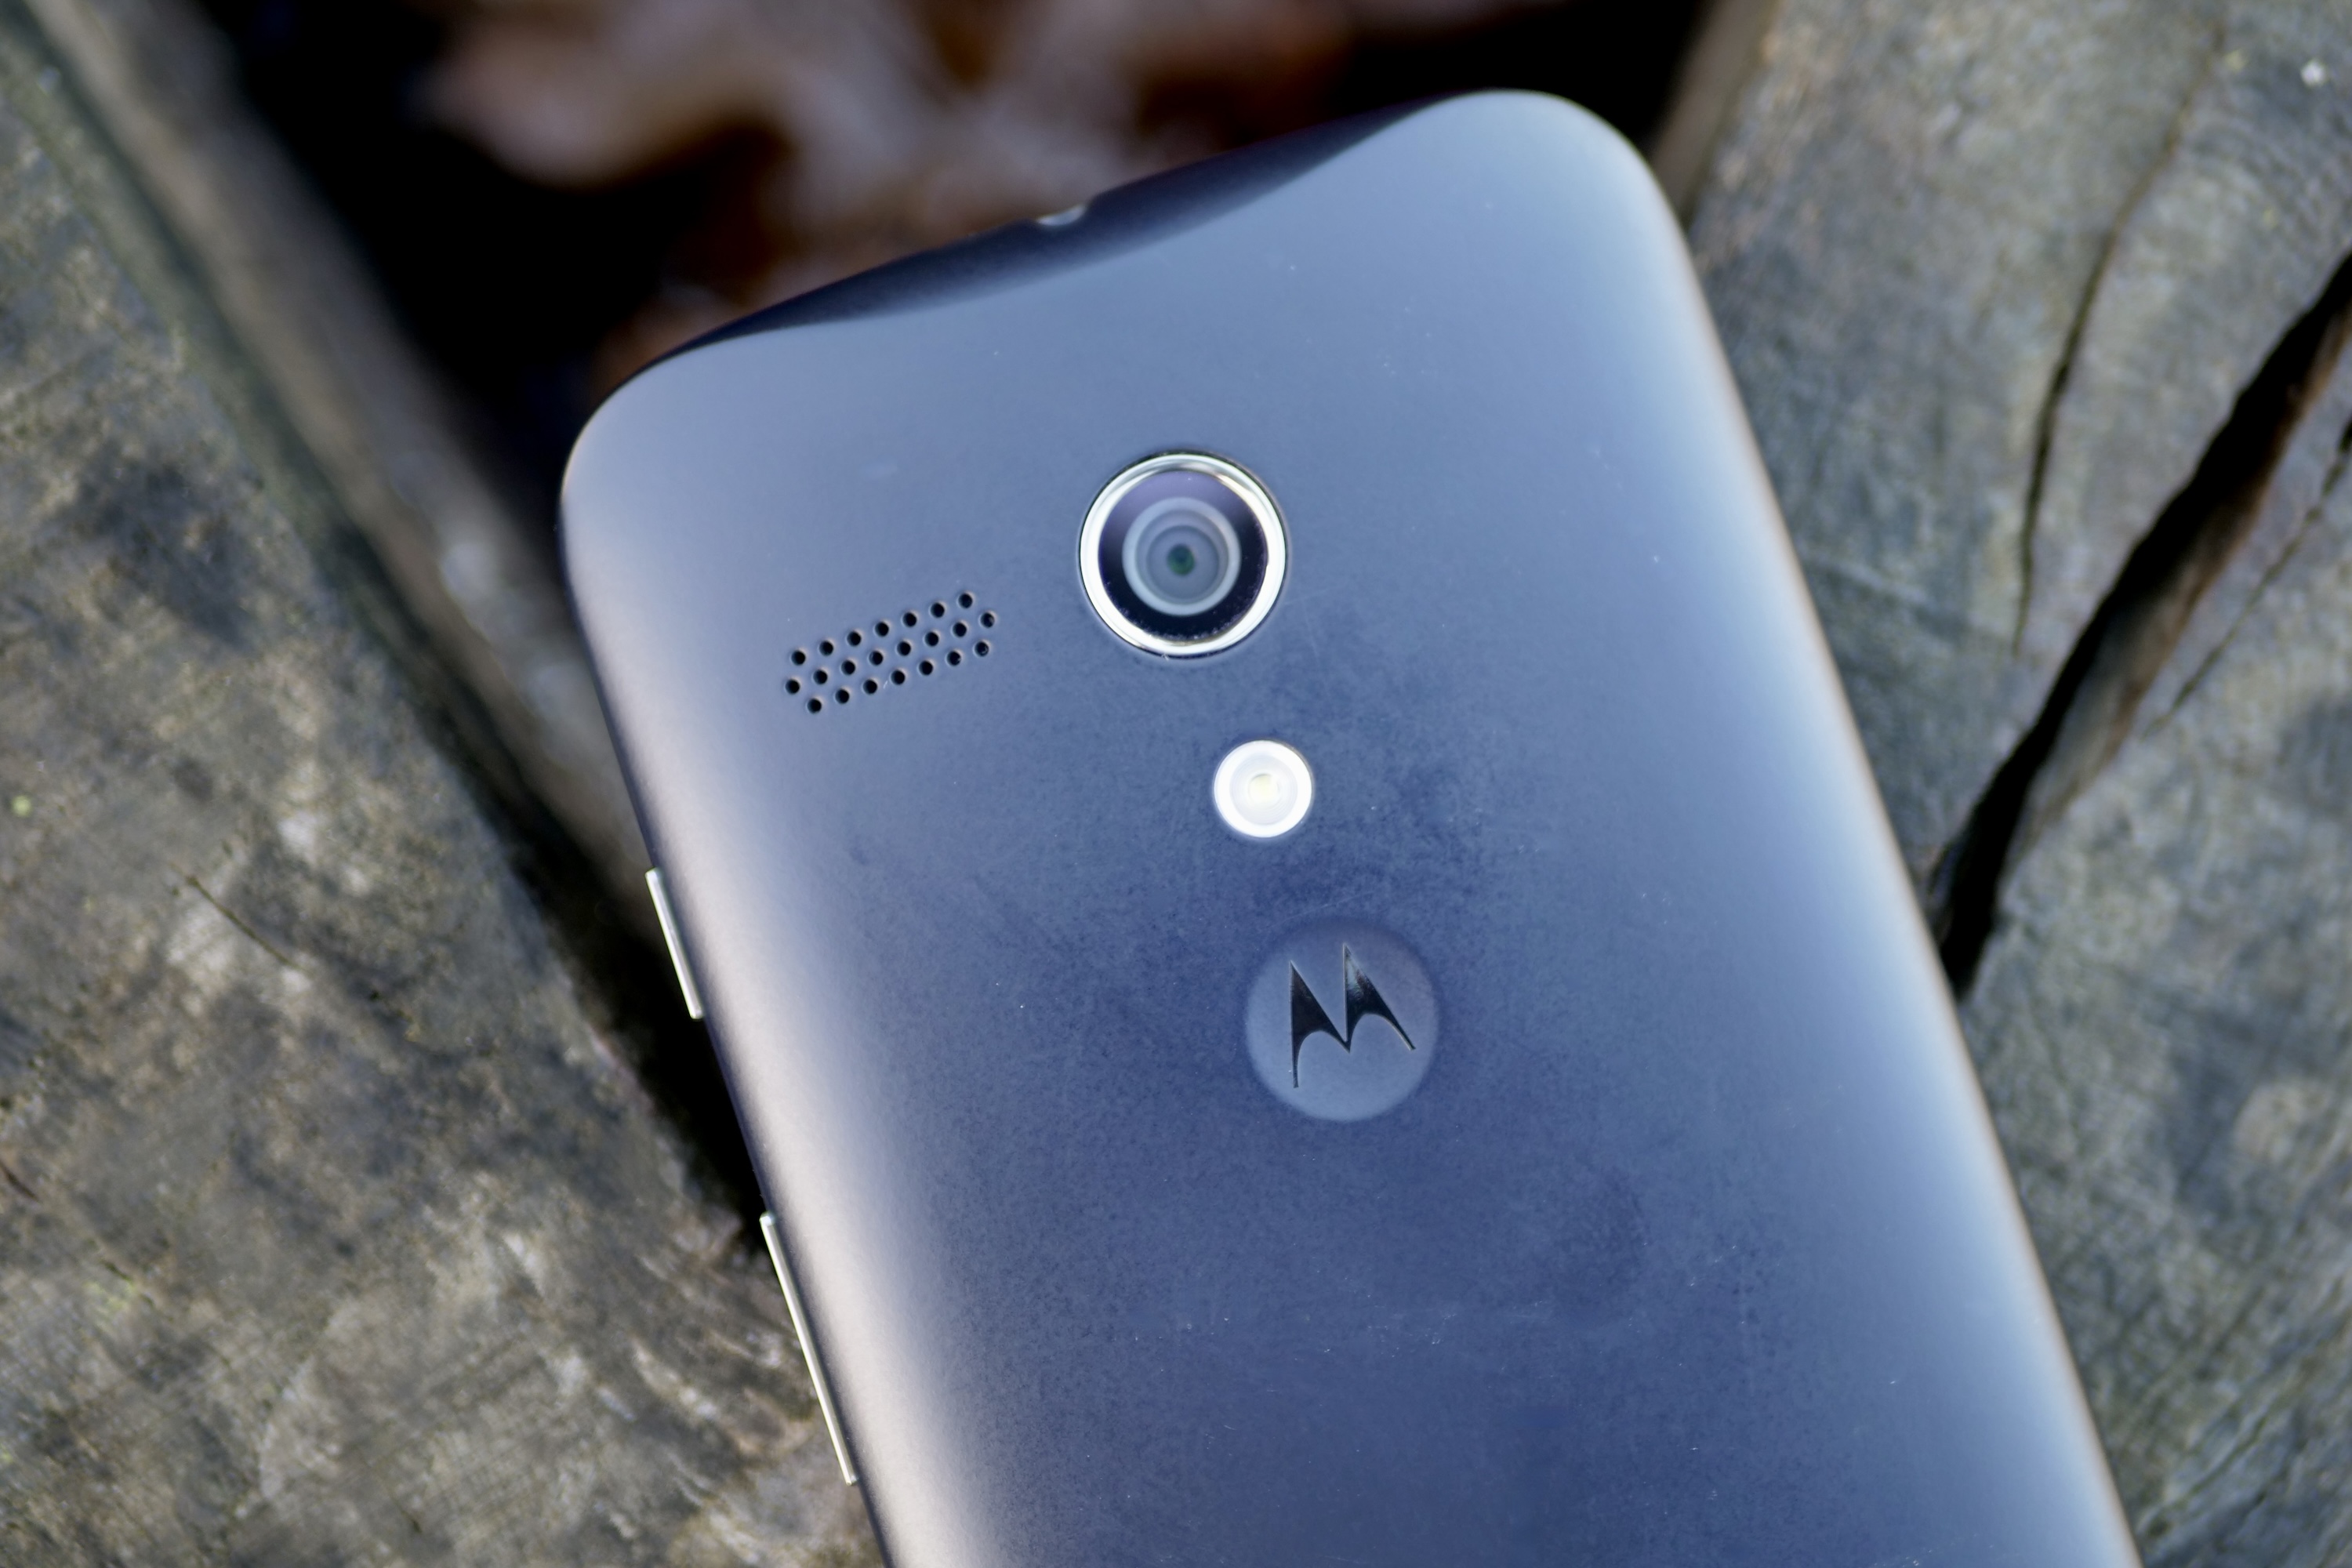 The Motorola Moto G's camera.